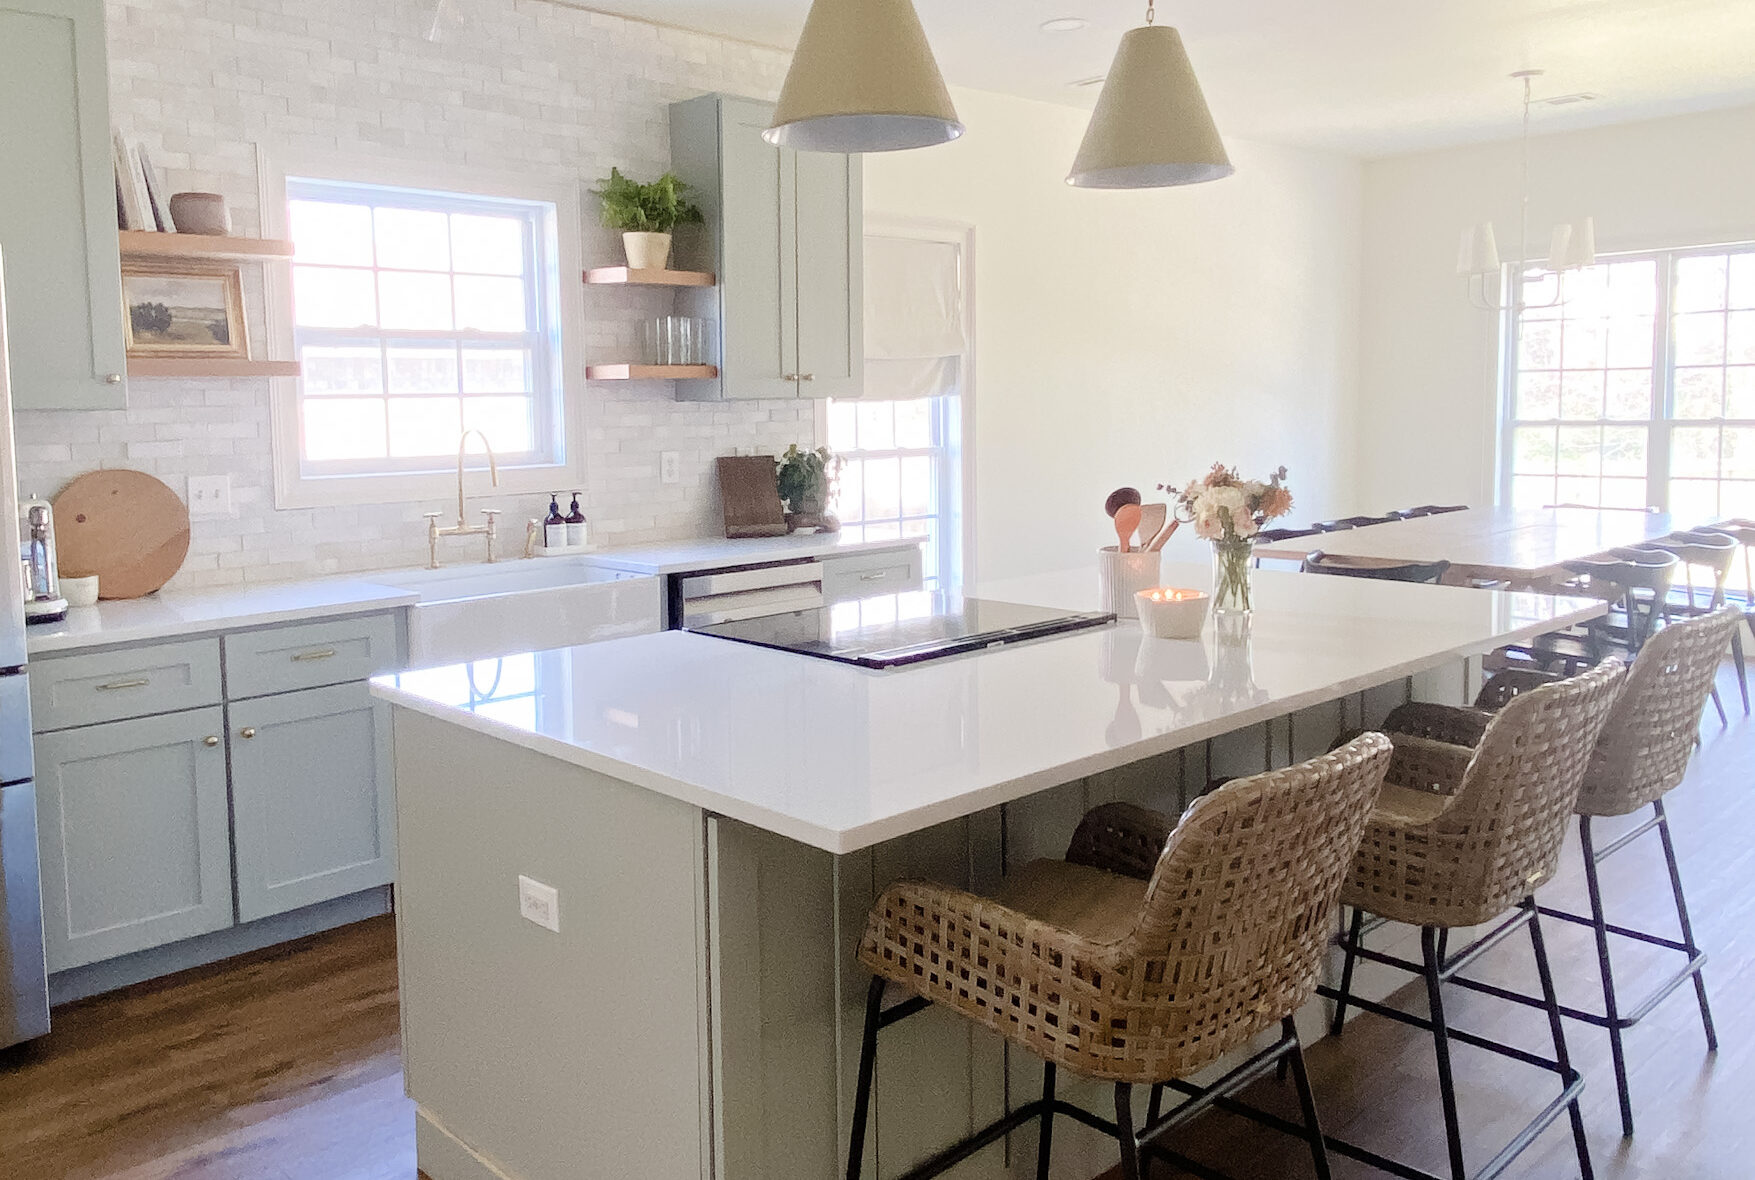 Kitchen renovation with island, wood floors and clay tile backsplash